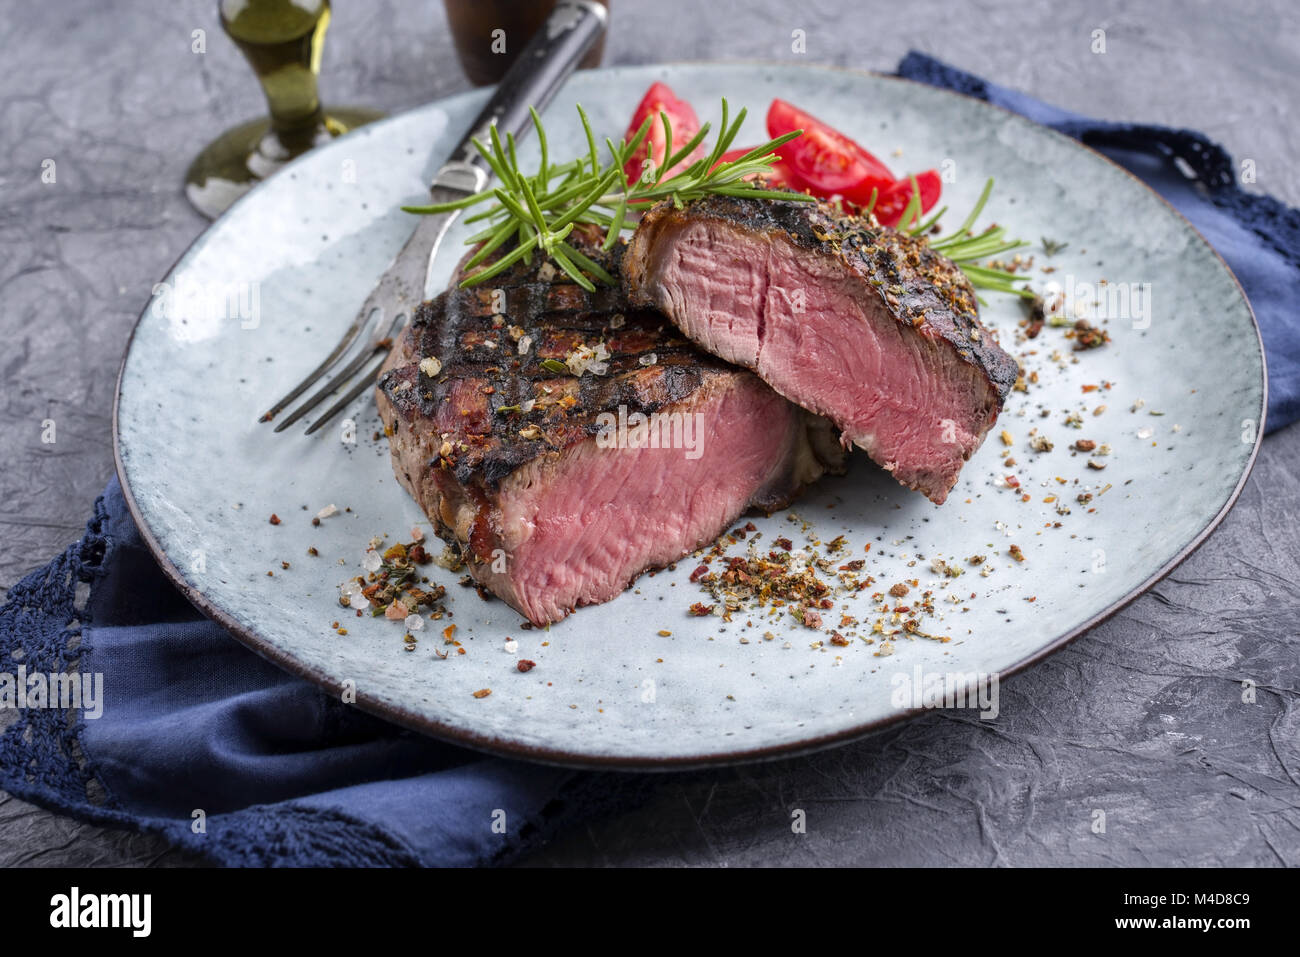 Barbecue Entrecote Steak on Plate Stock Photo - Alamy